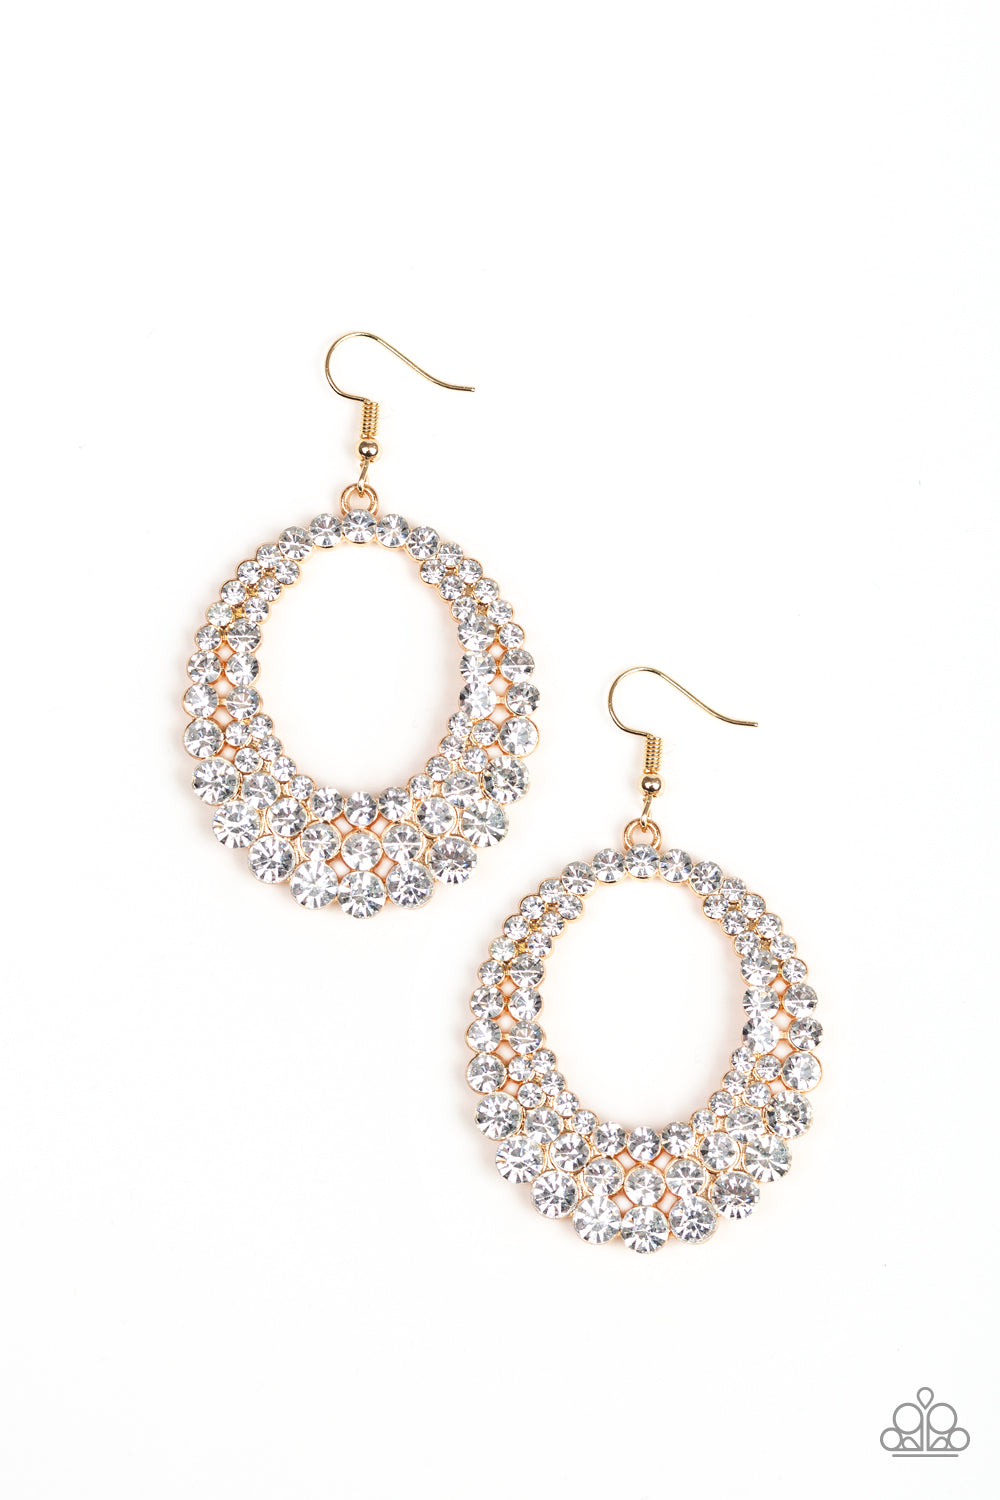 Universal Shimmer Gold Paparazzi Earrings Cashmere Pink Jewels - Cashmere Pink Jewels & Accessories, Cashmere Pink Jewels & Accessories - Paparazzi